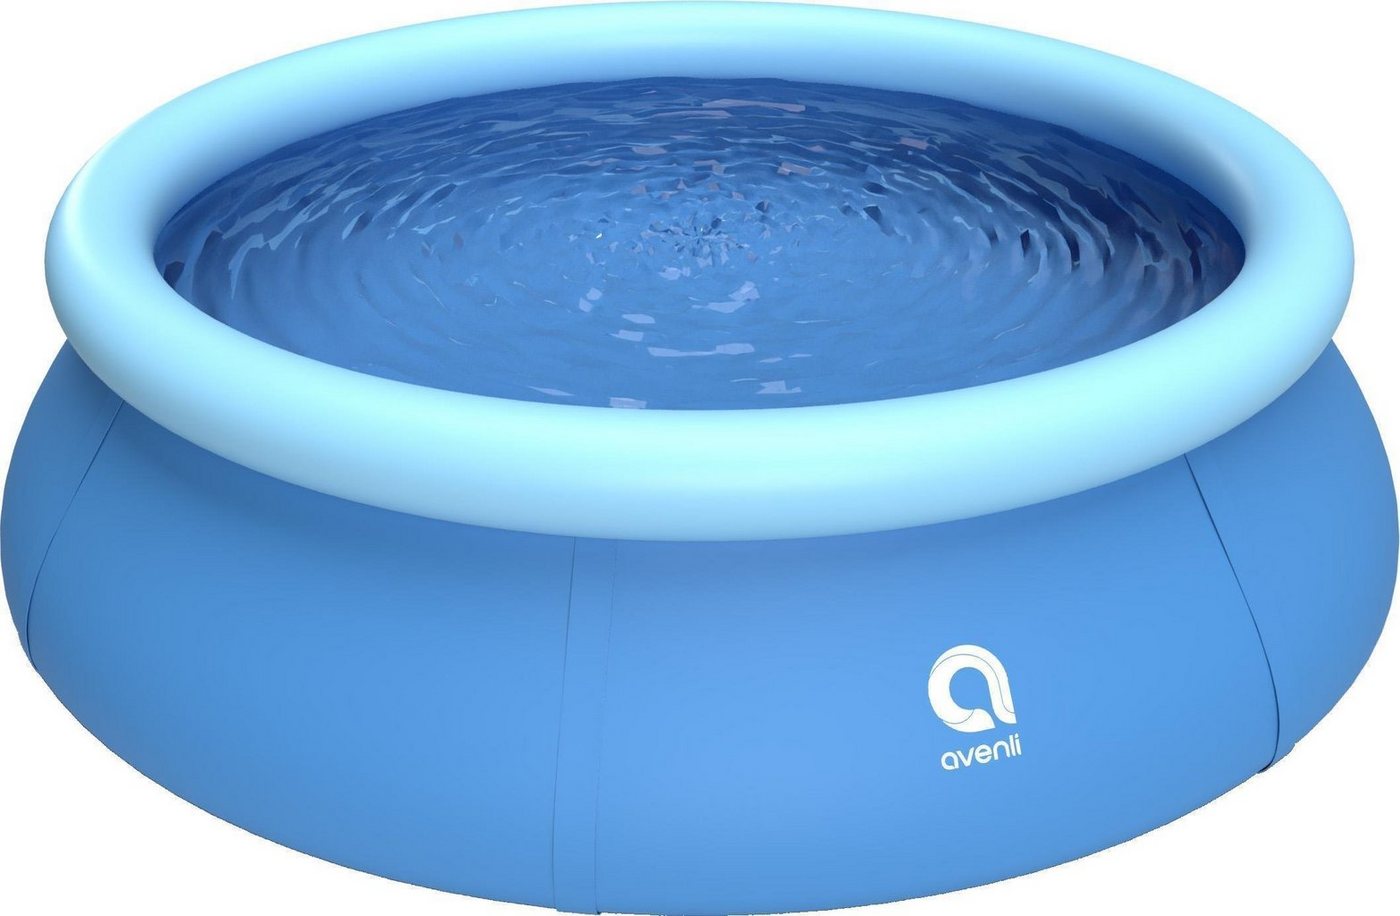 Avenli Quick-Up Pool Prompt Set Pool 244 x 63 cm (Aufstellpool mit aufblasbarem Ring), Swimmingpool auch als Ersatzpool geeignet von Avenli